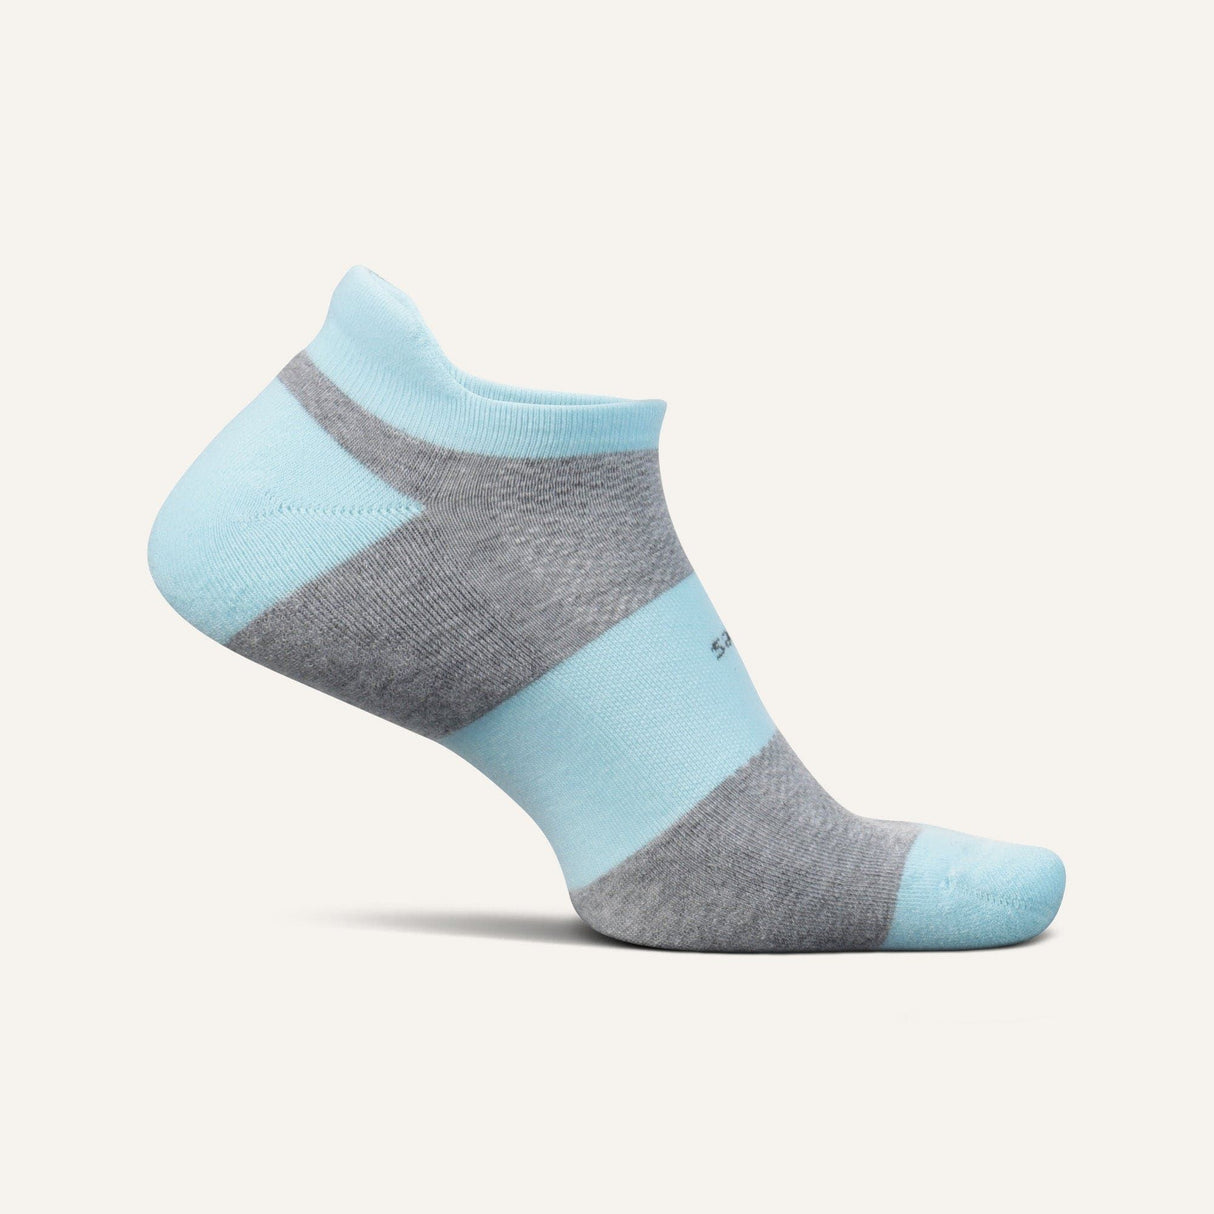 Feetures High Performance Max Cushion No Show Tab Socks  -  Small / Bliss Blue